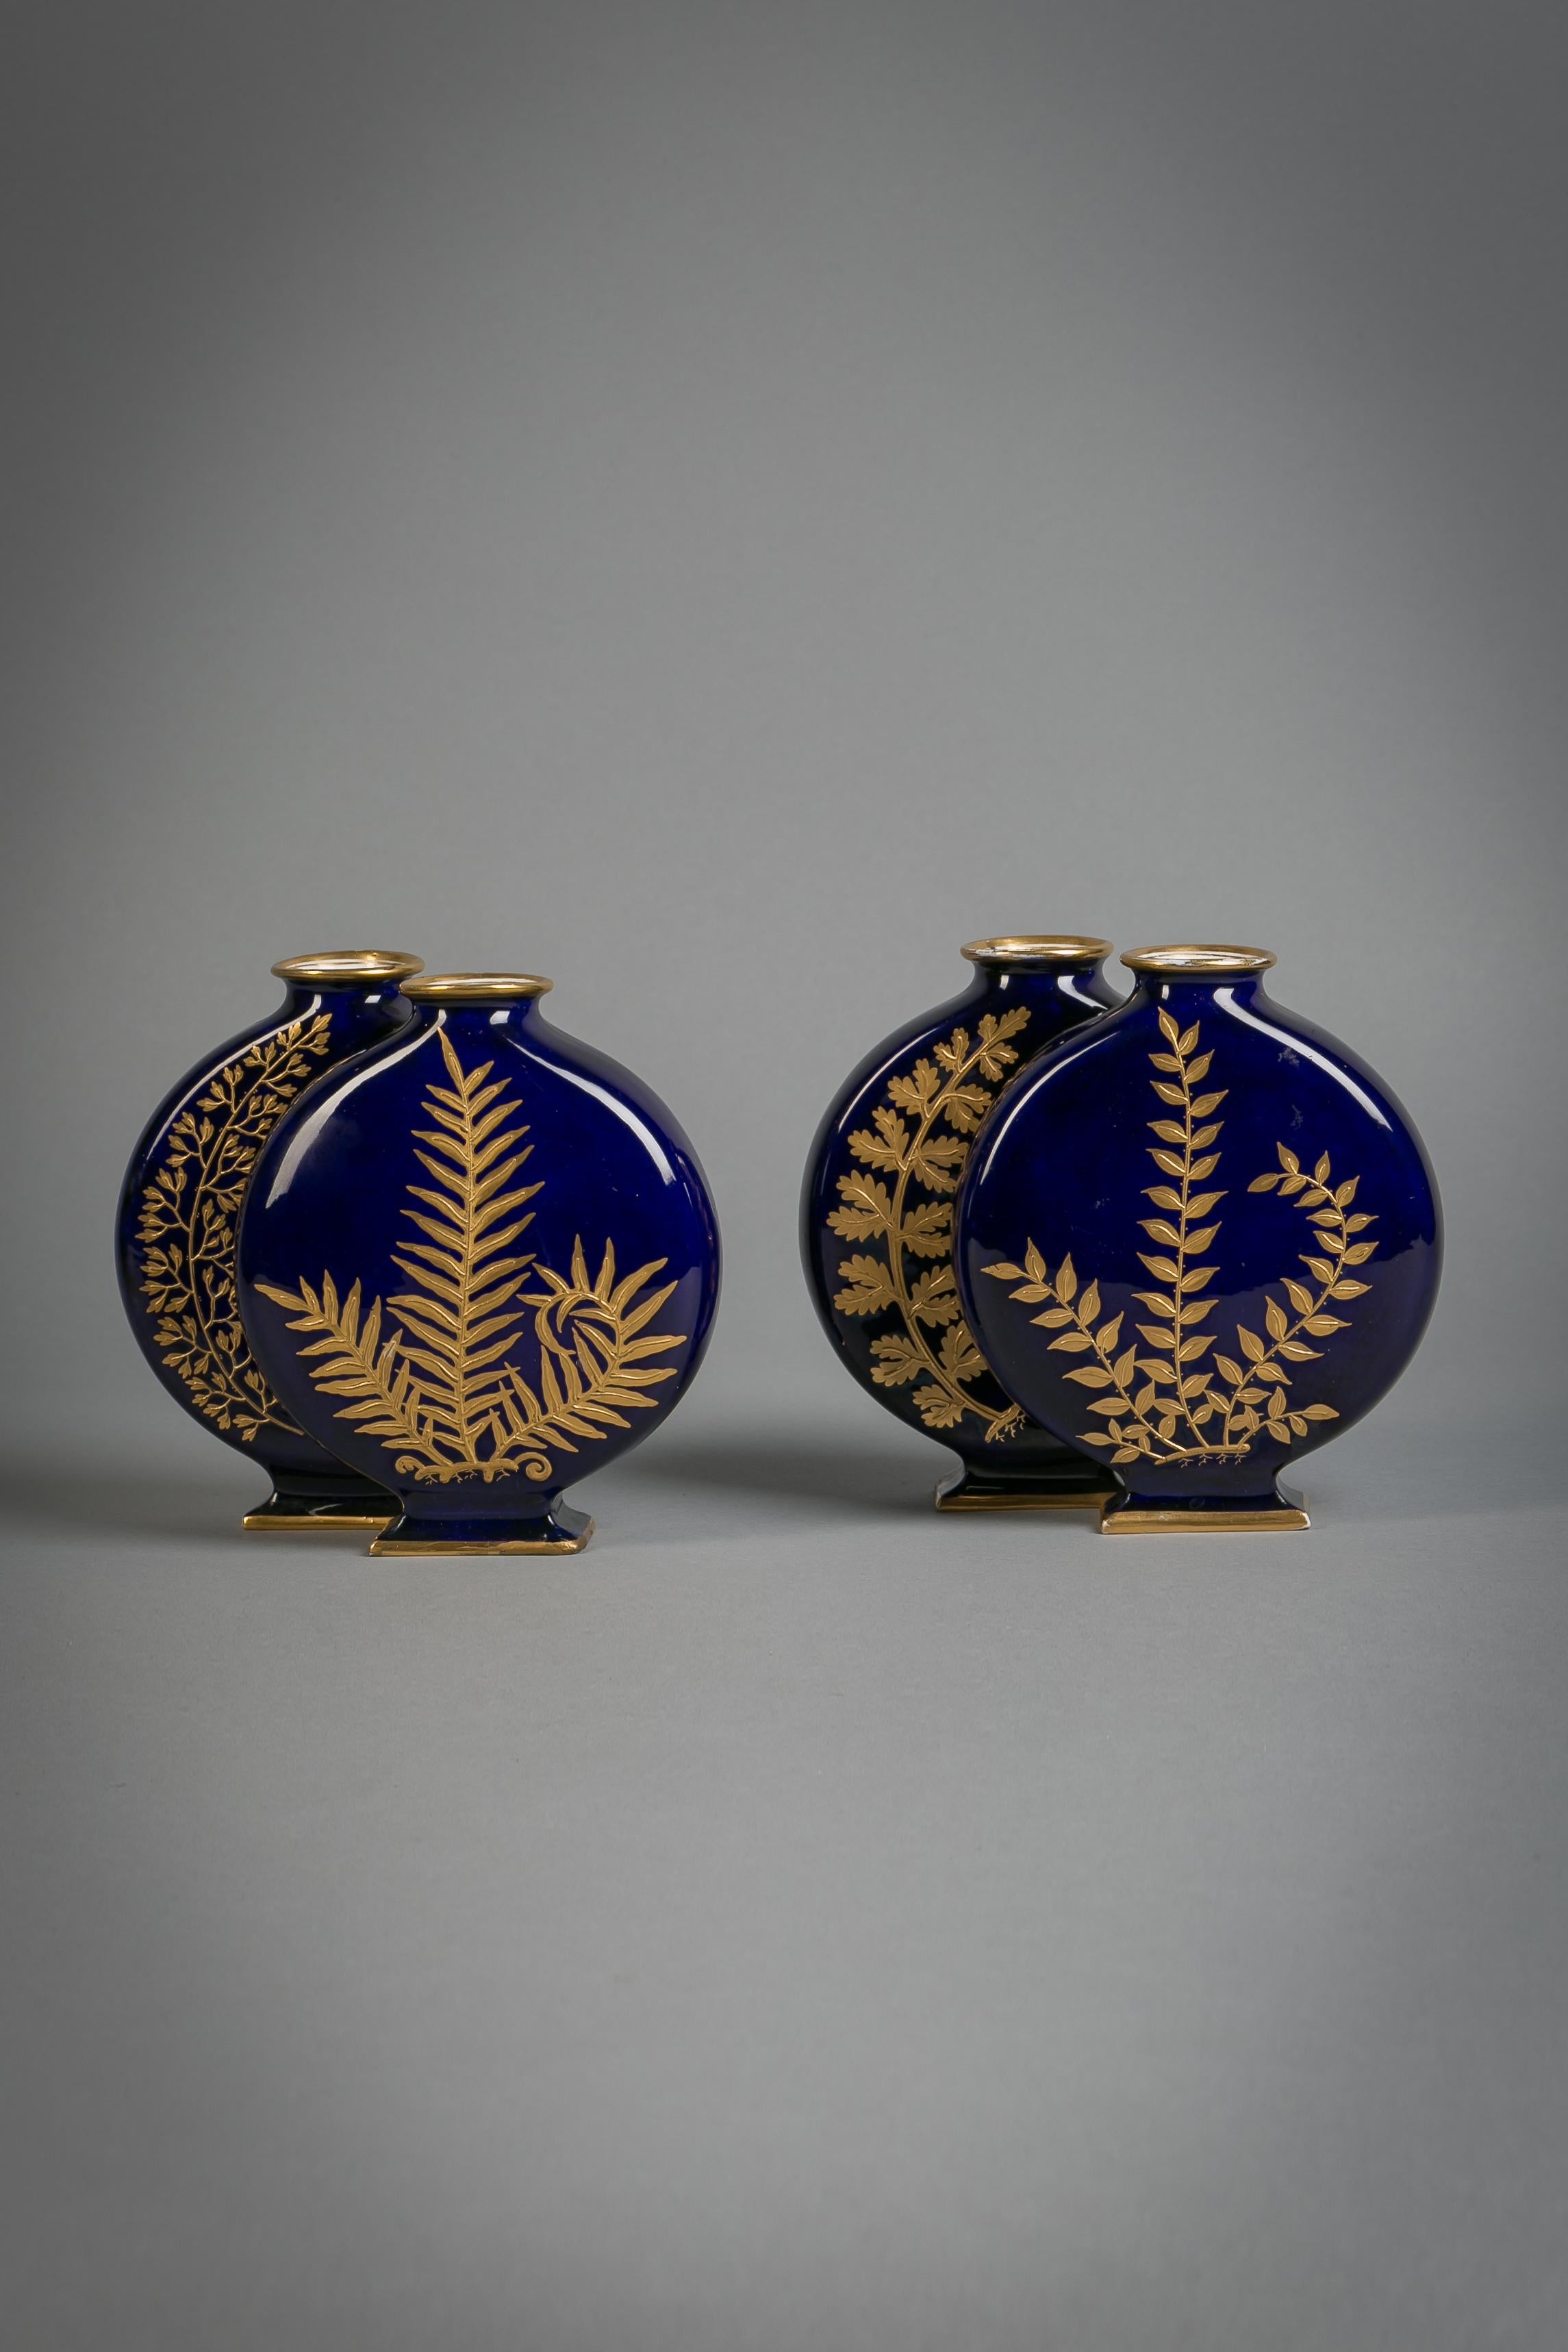 Pair of English porcelain orientalist double vases, Minton, circa 1880.